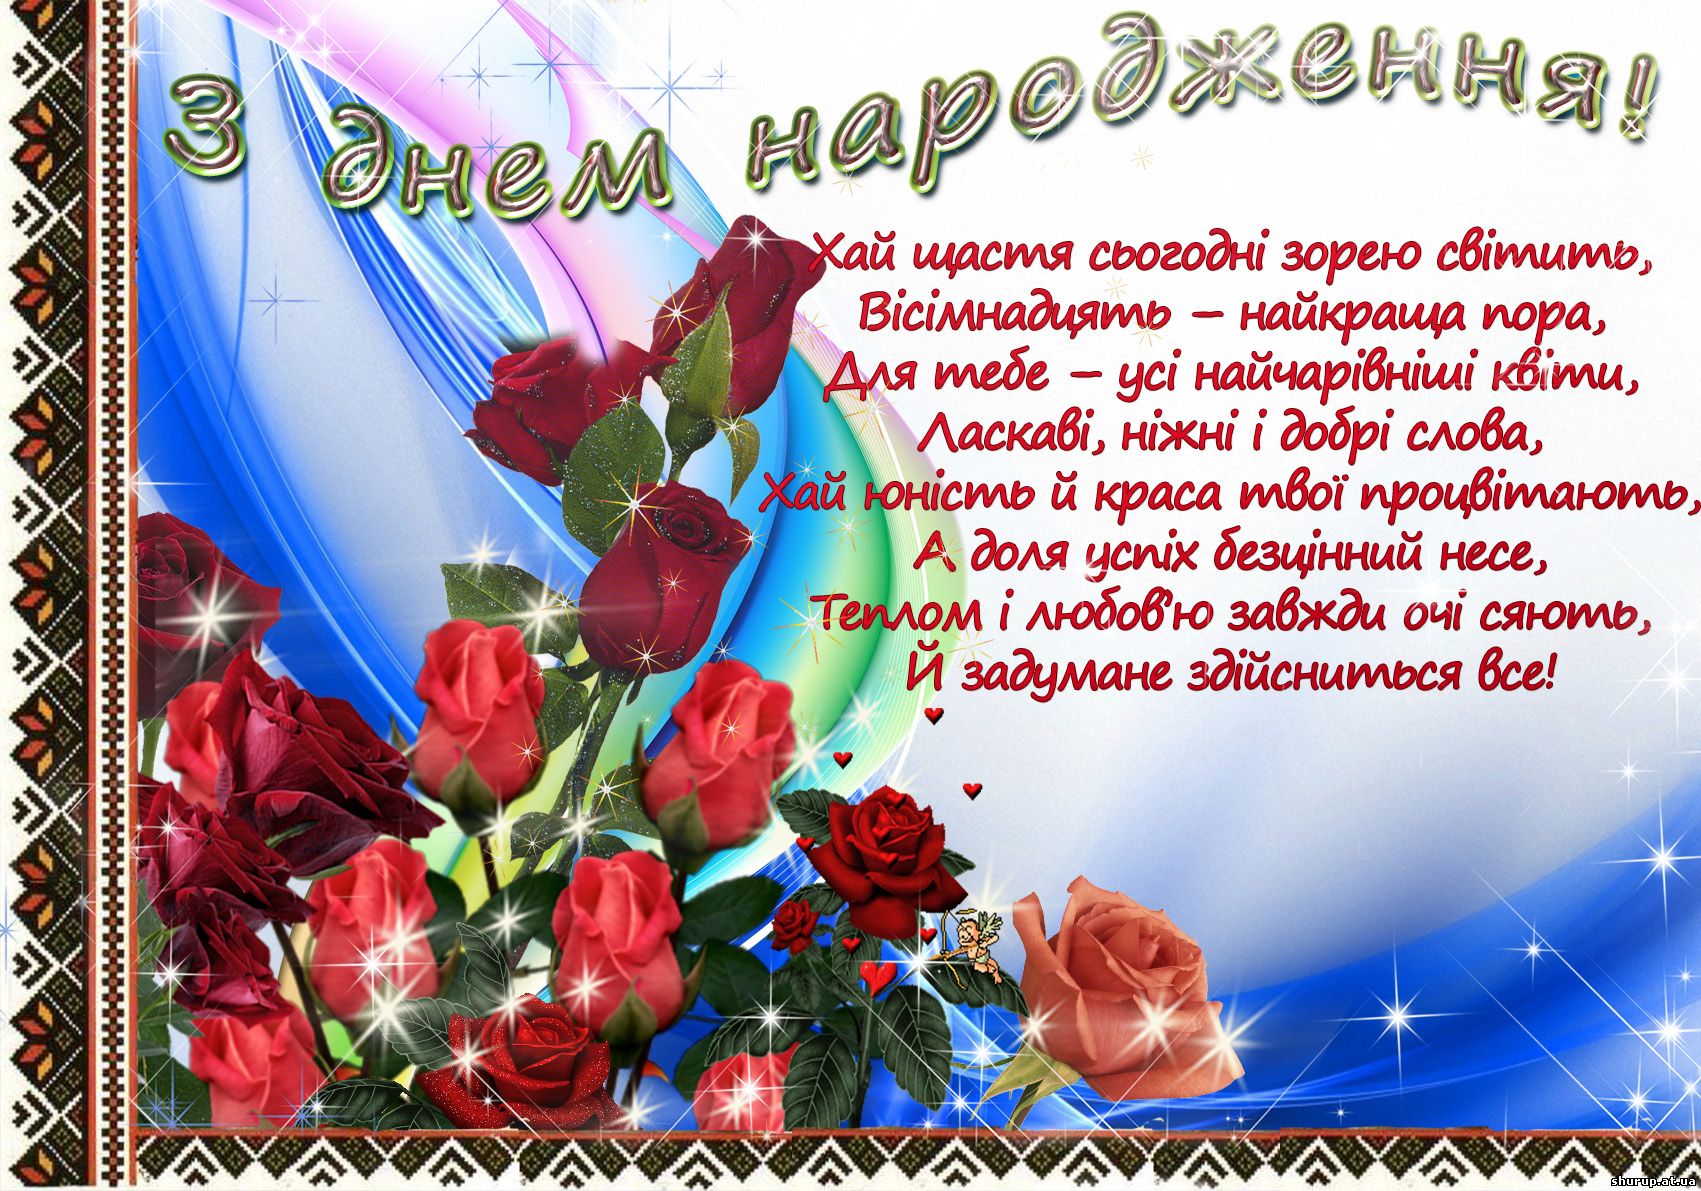 Поздравить с днем рождения на украинском. Открытка с днем рождения на украинском. Открытки с днём рождения на украинском языке. Красивое поздравление с днём рождения на украинском языке. Гарні привітання з днем народження.